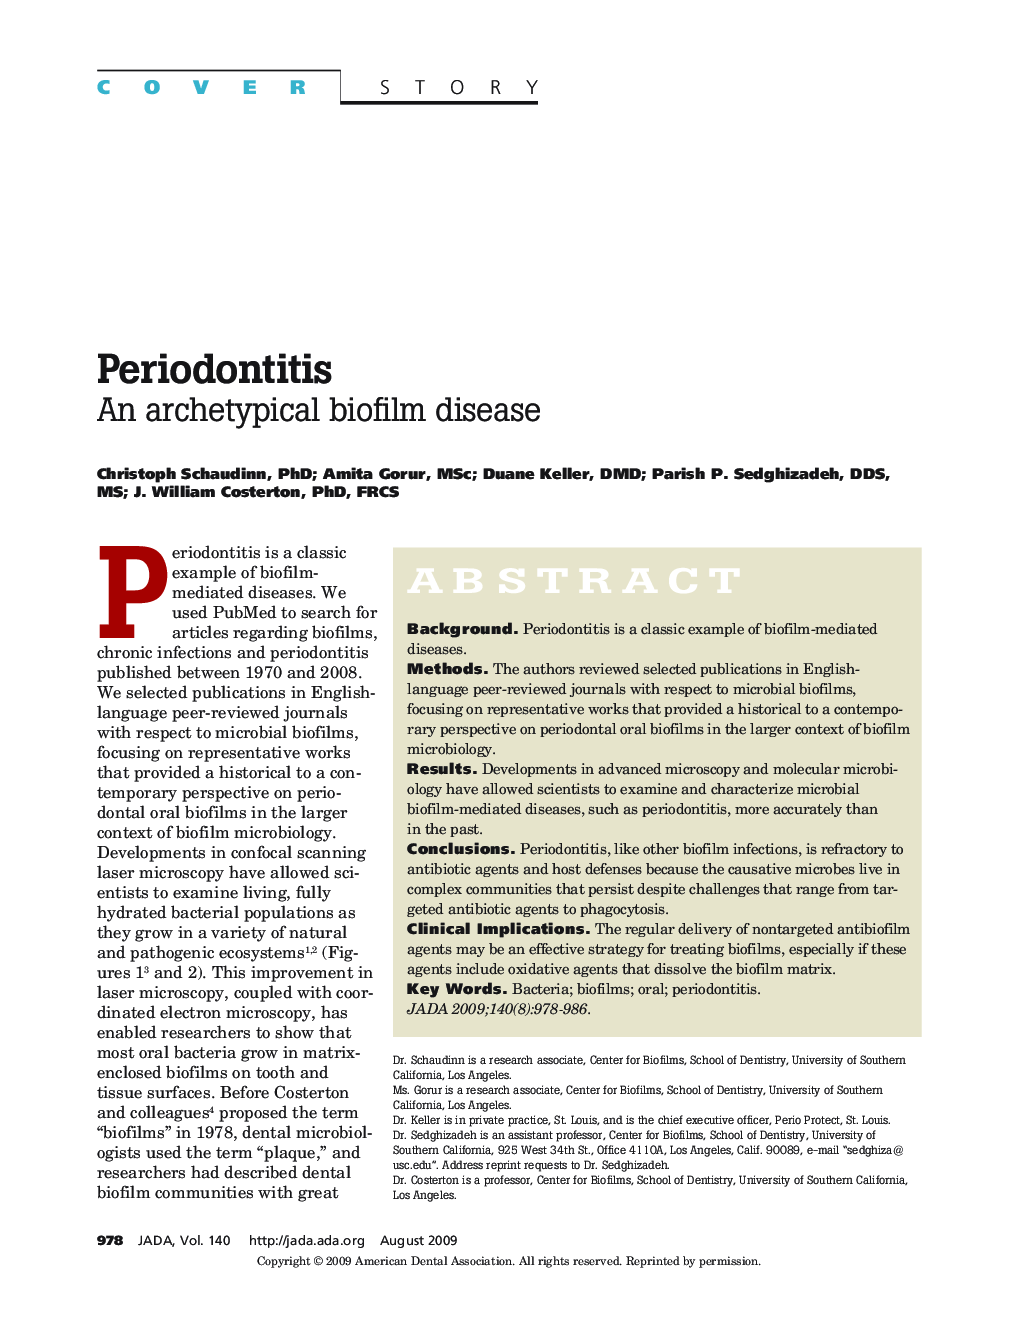 Periodontitis : An Archetypical Biofilm Disease